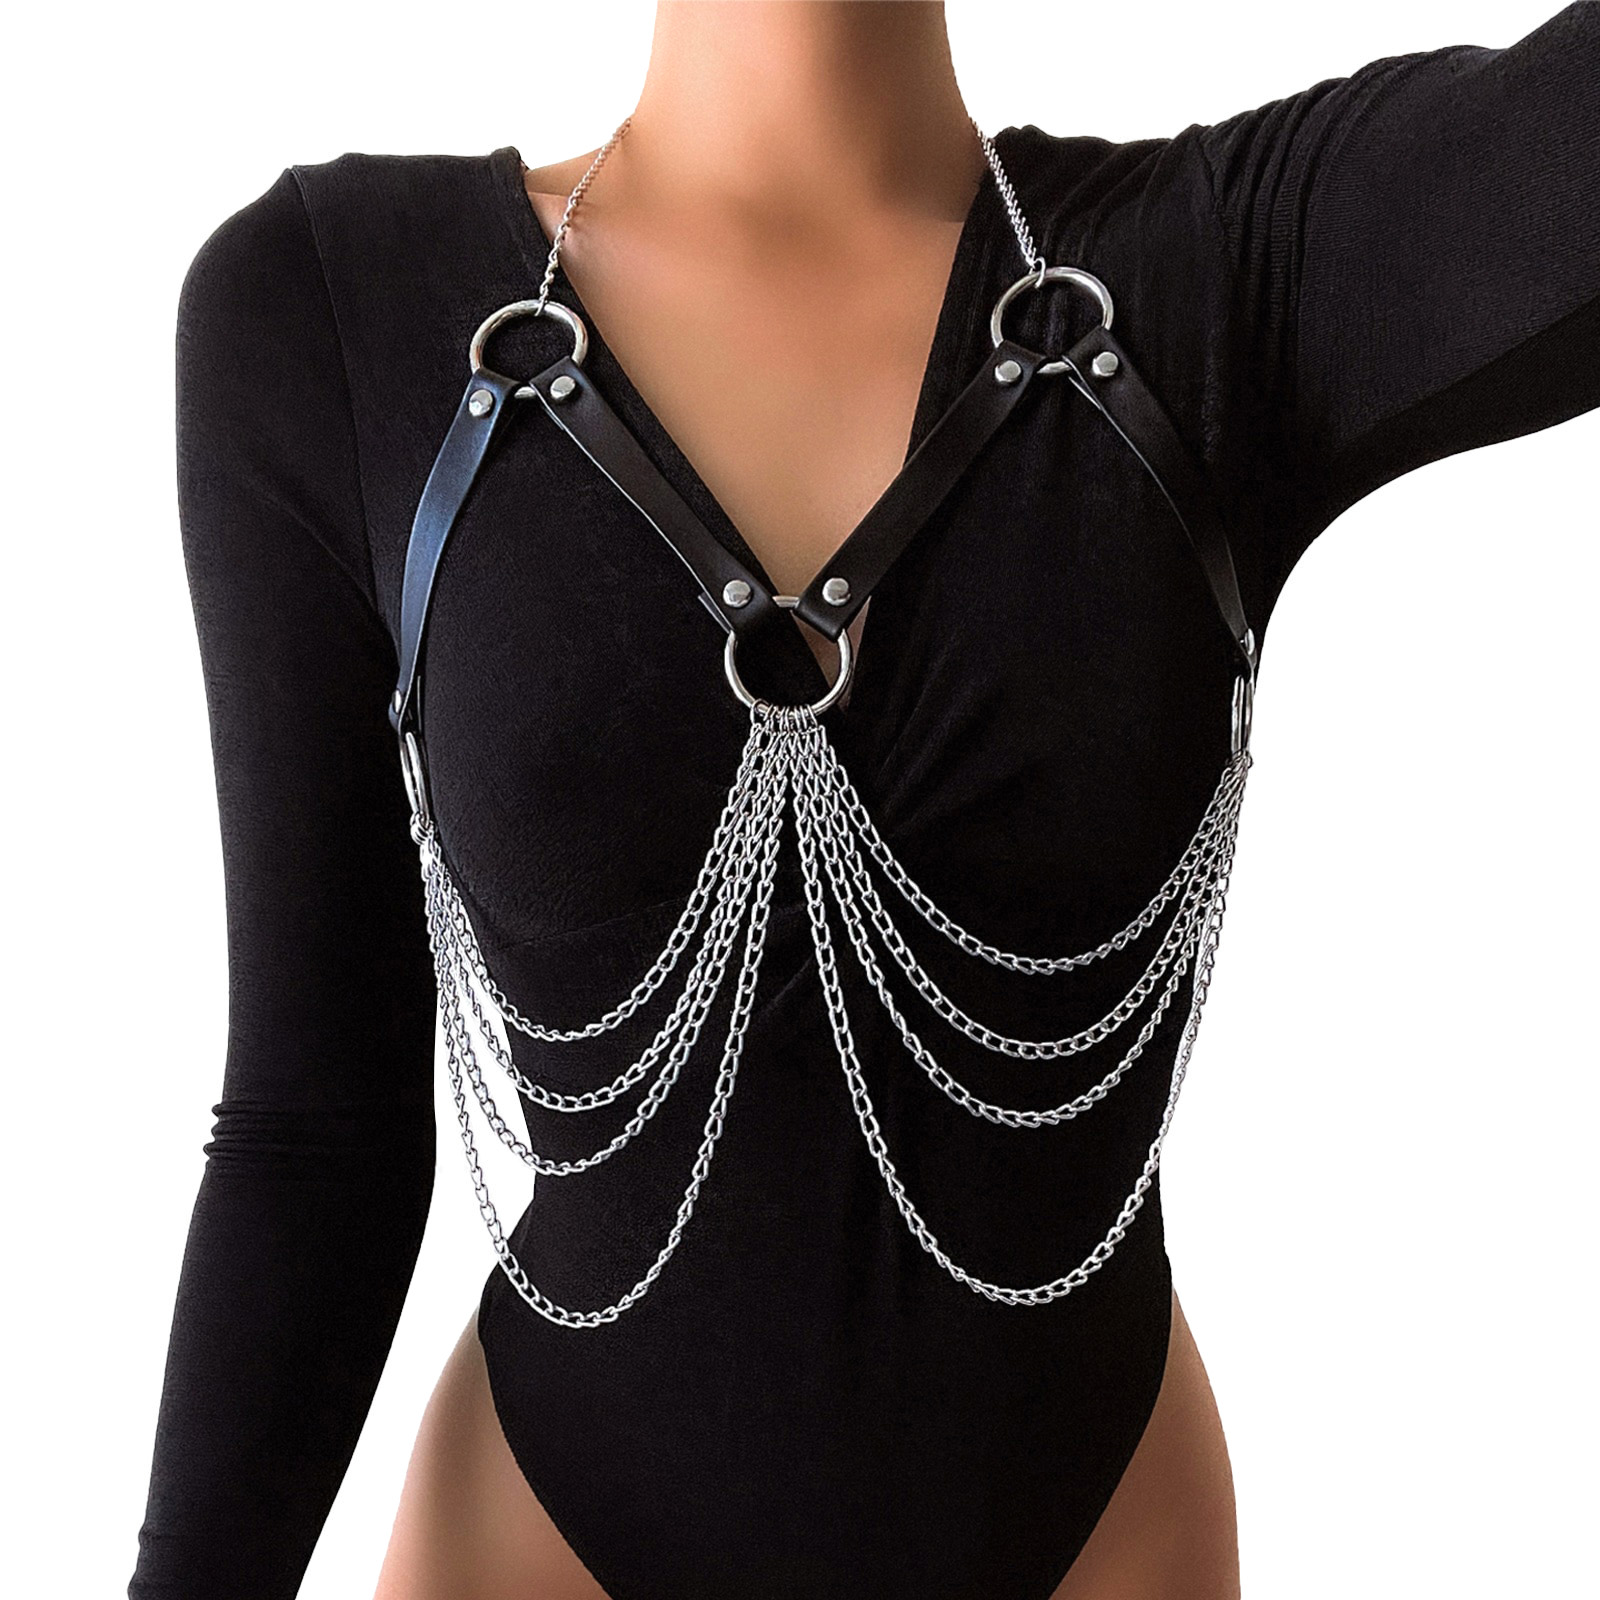 Women's Body Bra Harness With Chain In Fetish Style / Alternative Fashion Belt Chain Accessories - EVE's SECRETS